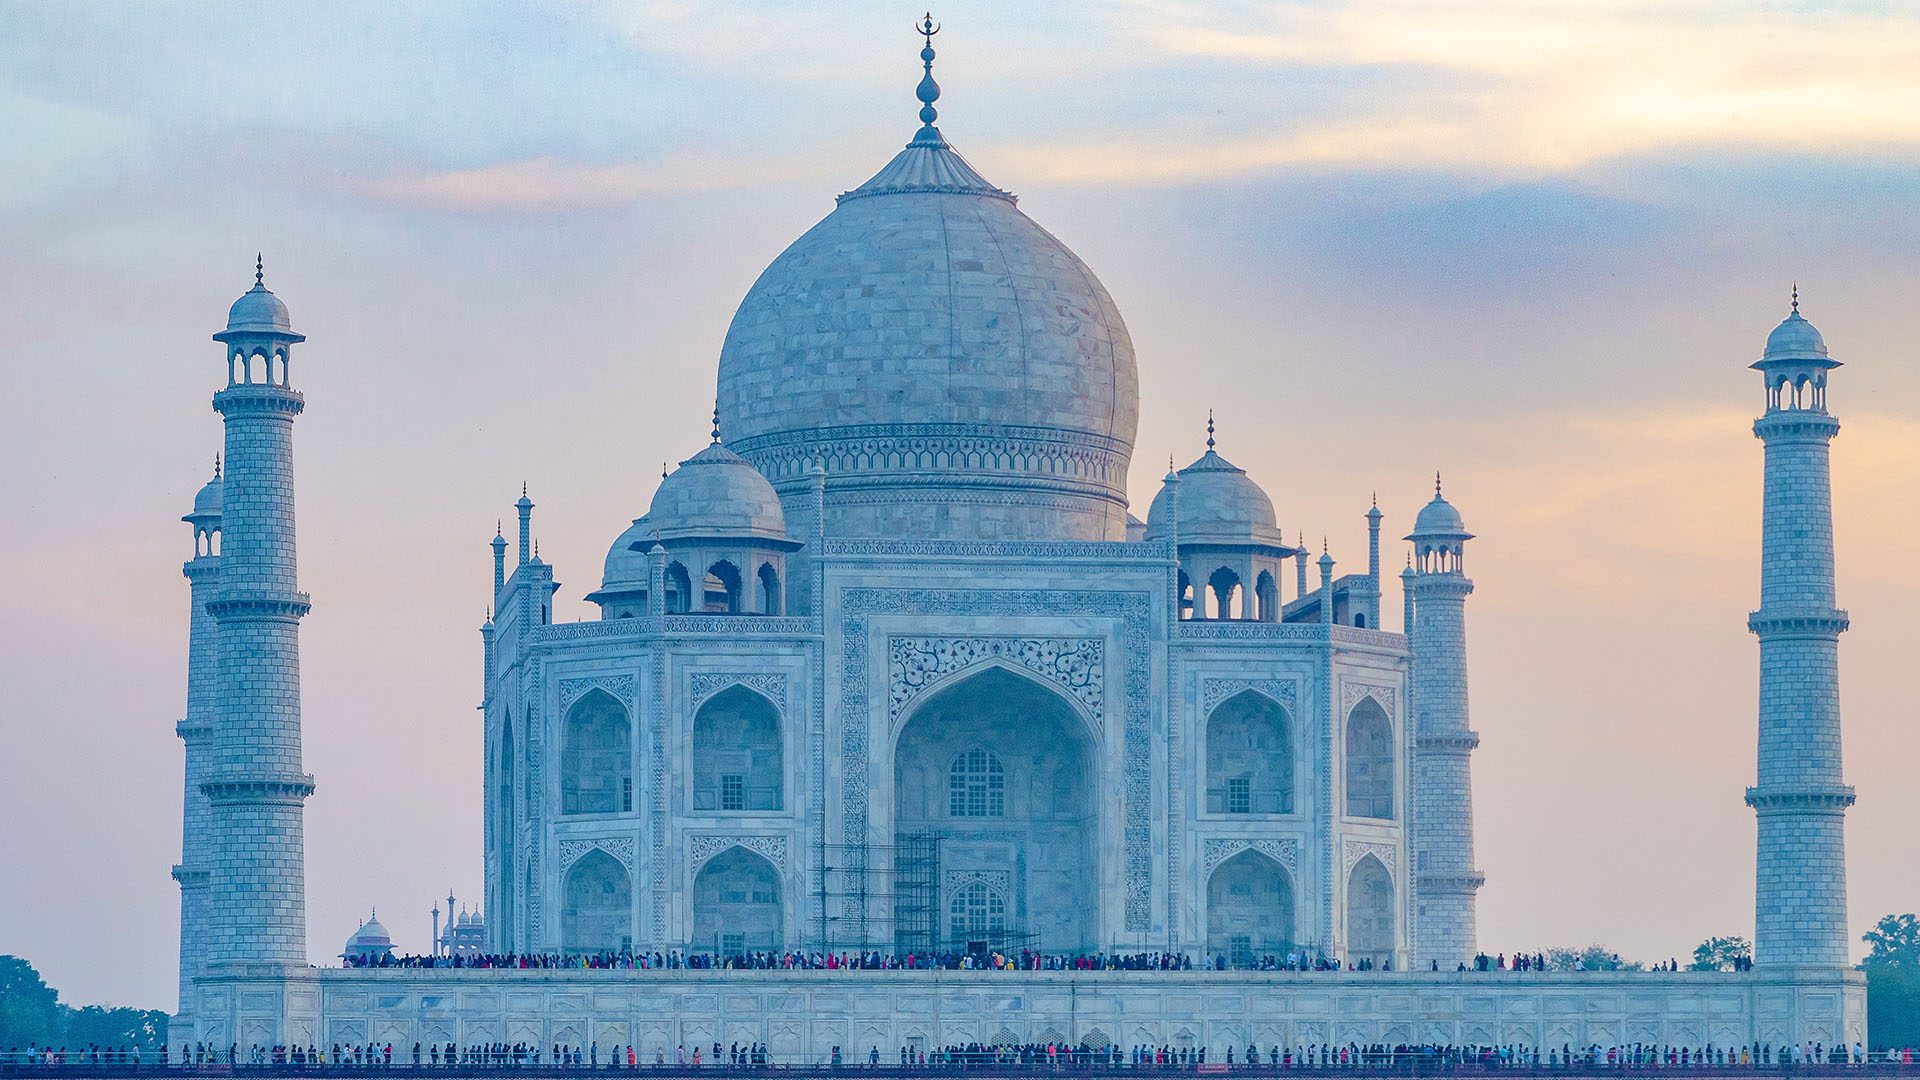 Taj Mahal, photo by Kirandeep Singh Walia, Pexels